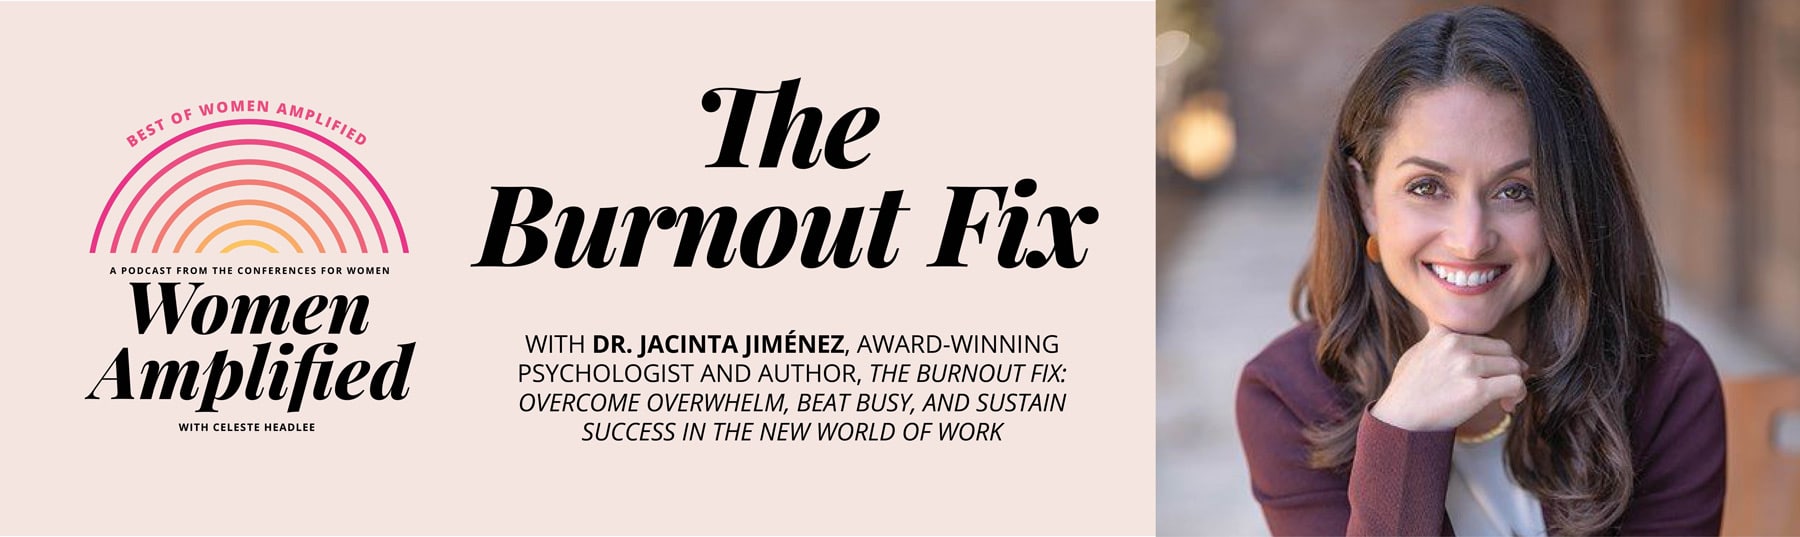 The Burnout Fix with Jacinta Jimenez | Best Of Women Amplified podcast